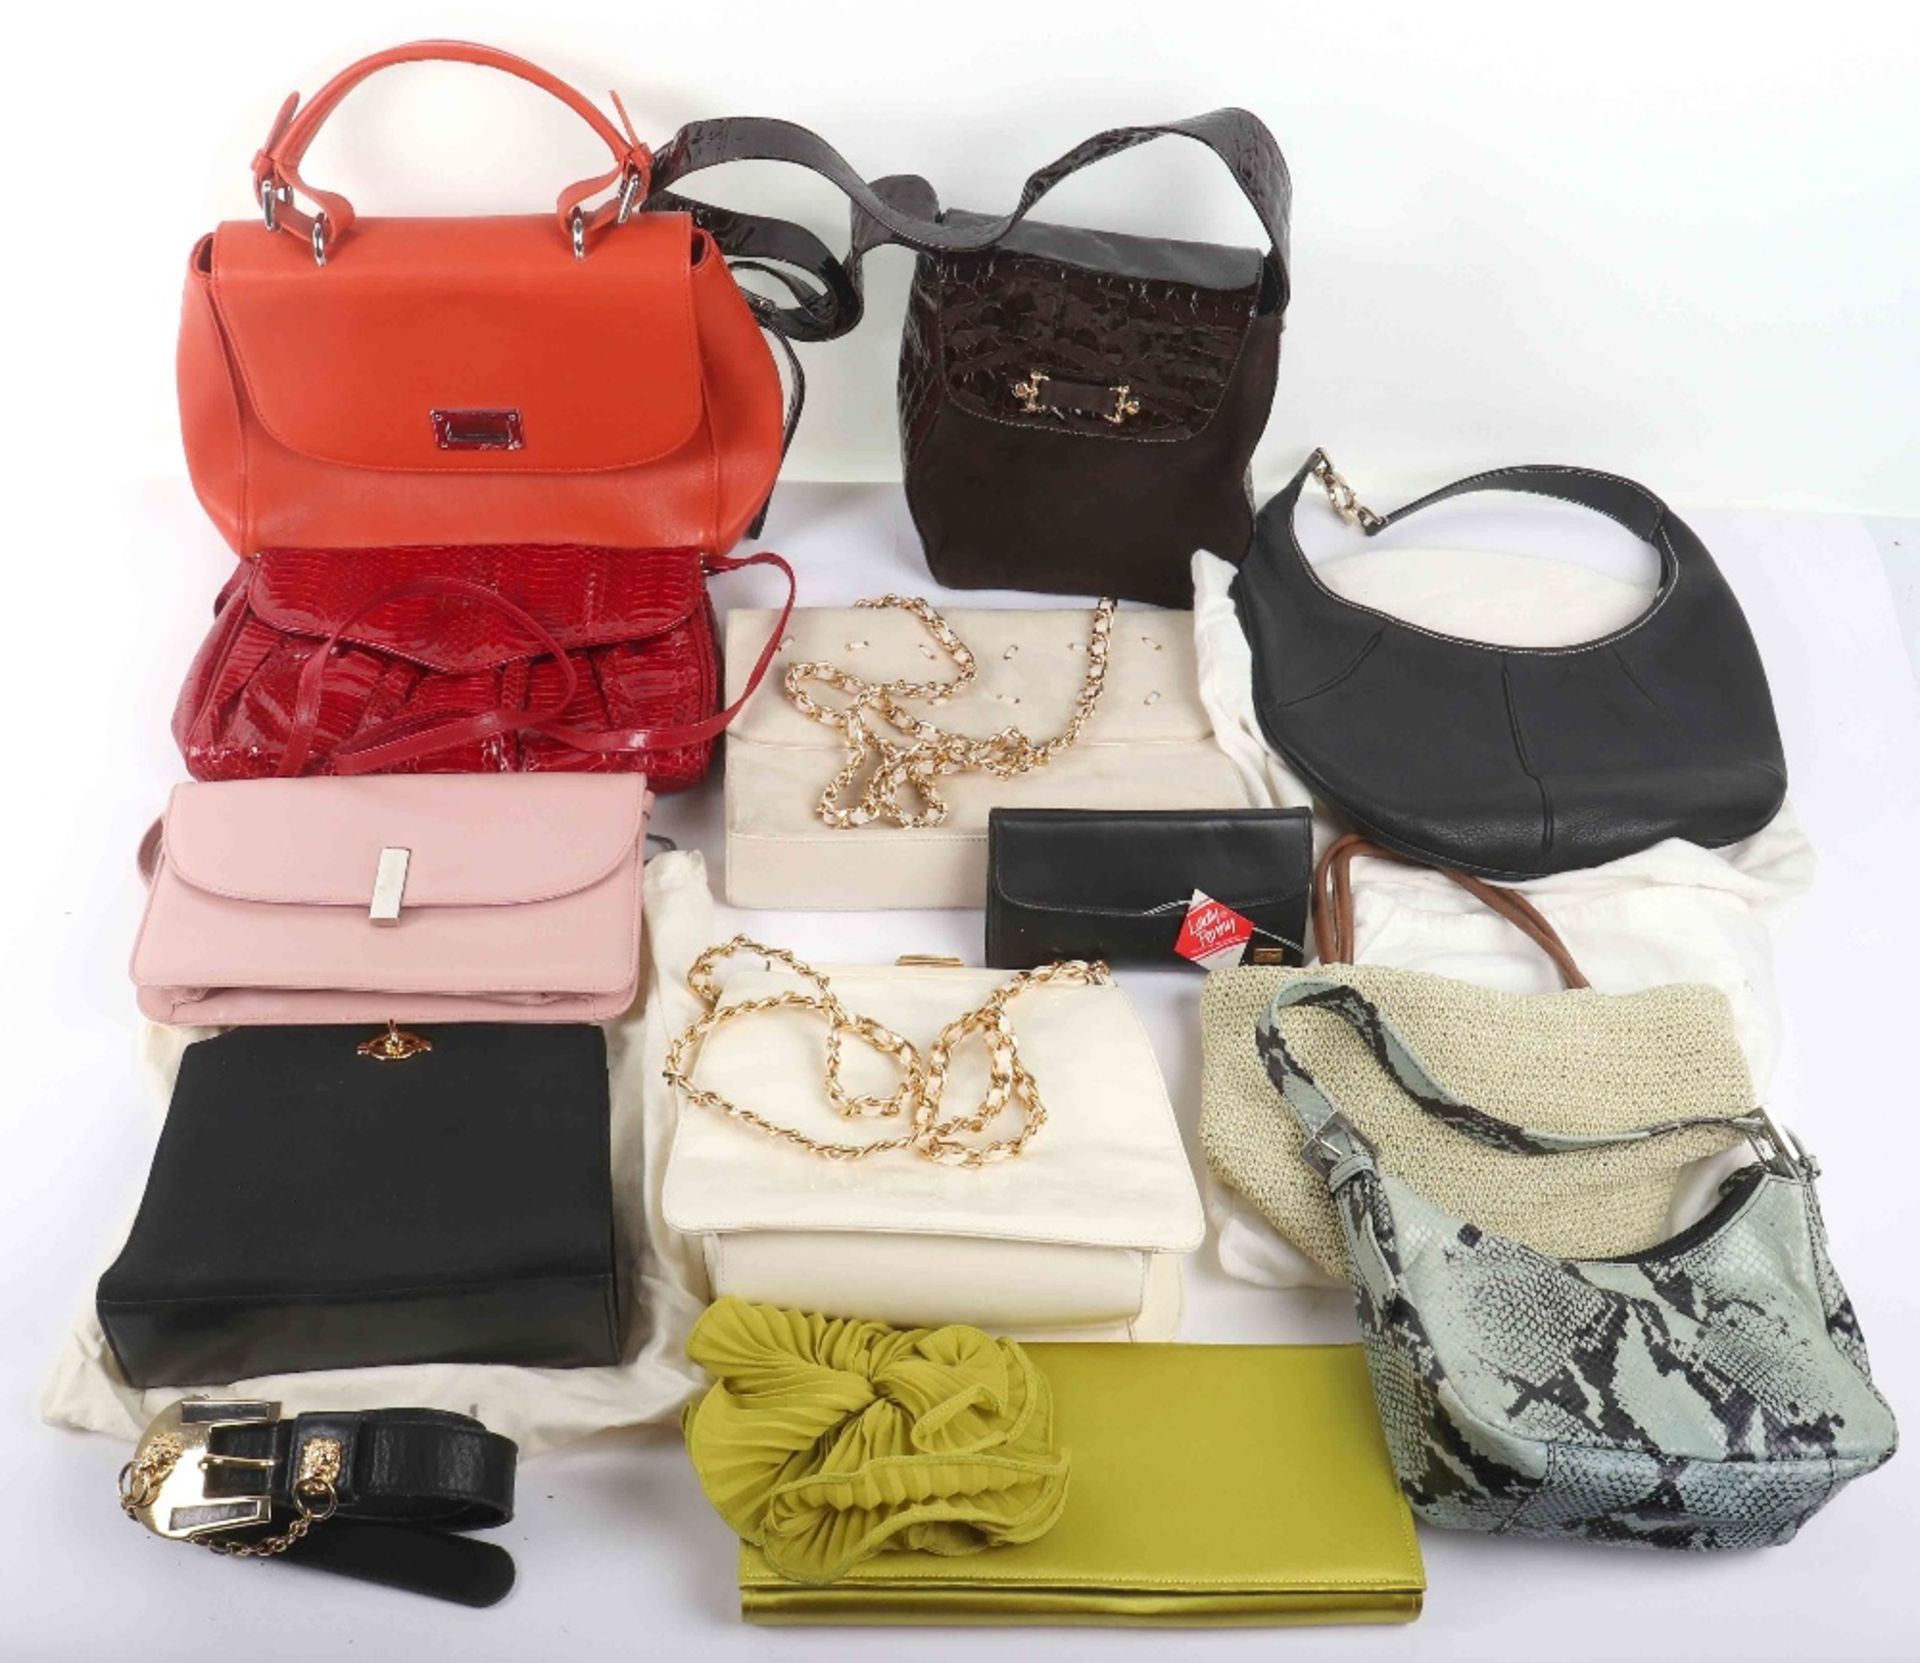 A selection of ladies handbags, including Bally, Kurt Geiger, Salvatore Ferragamo